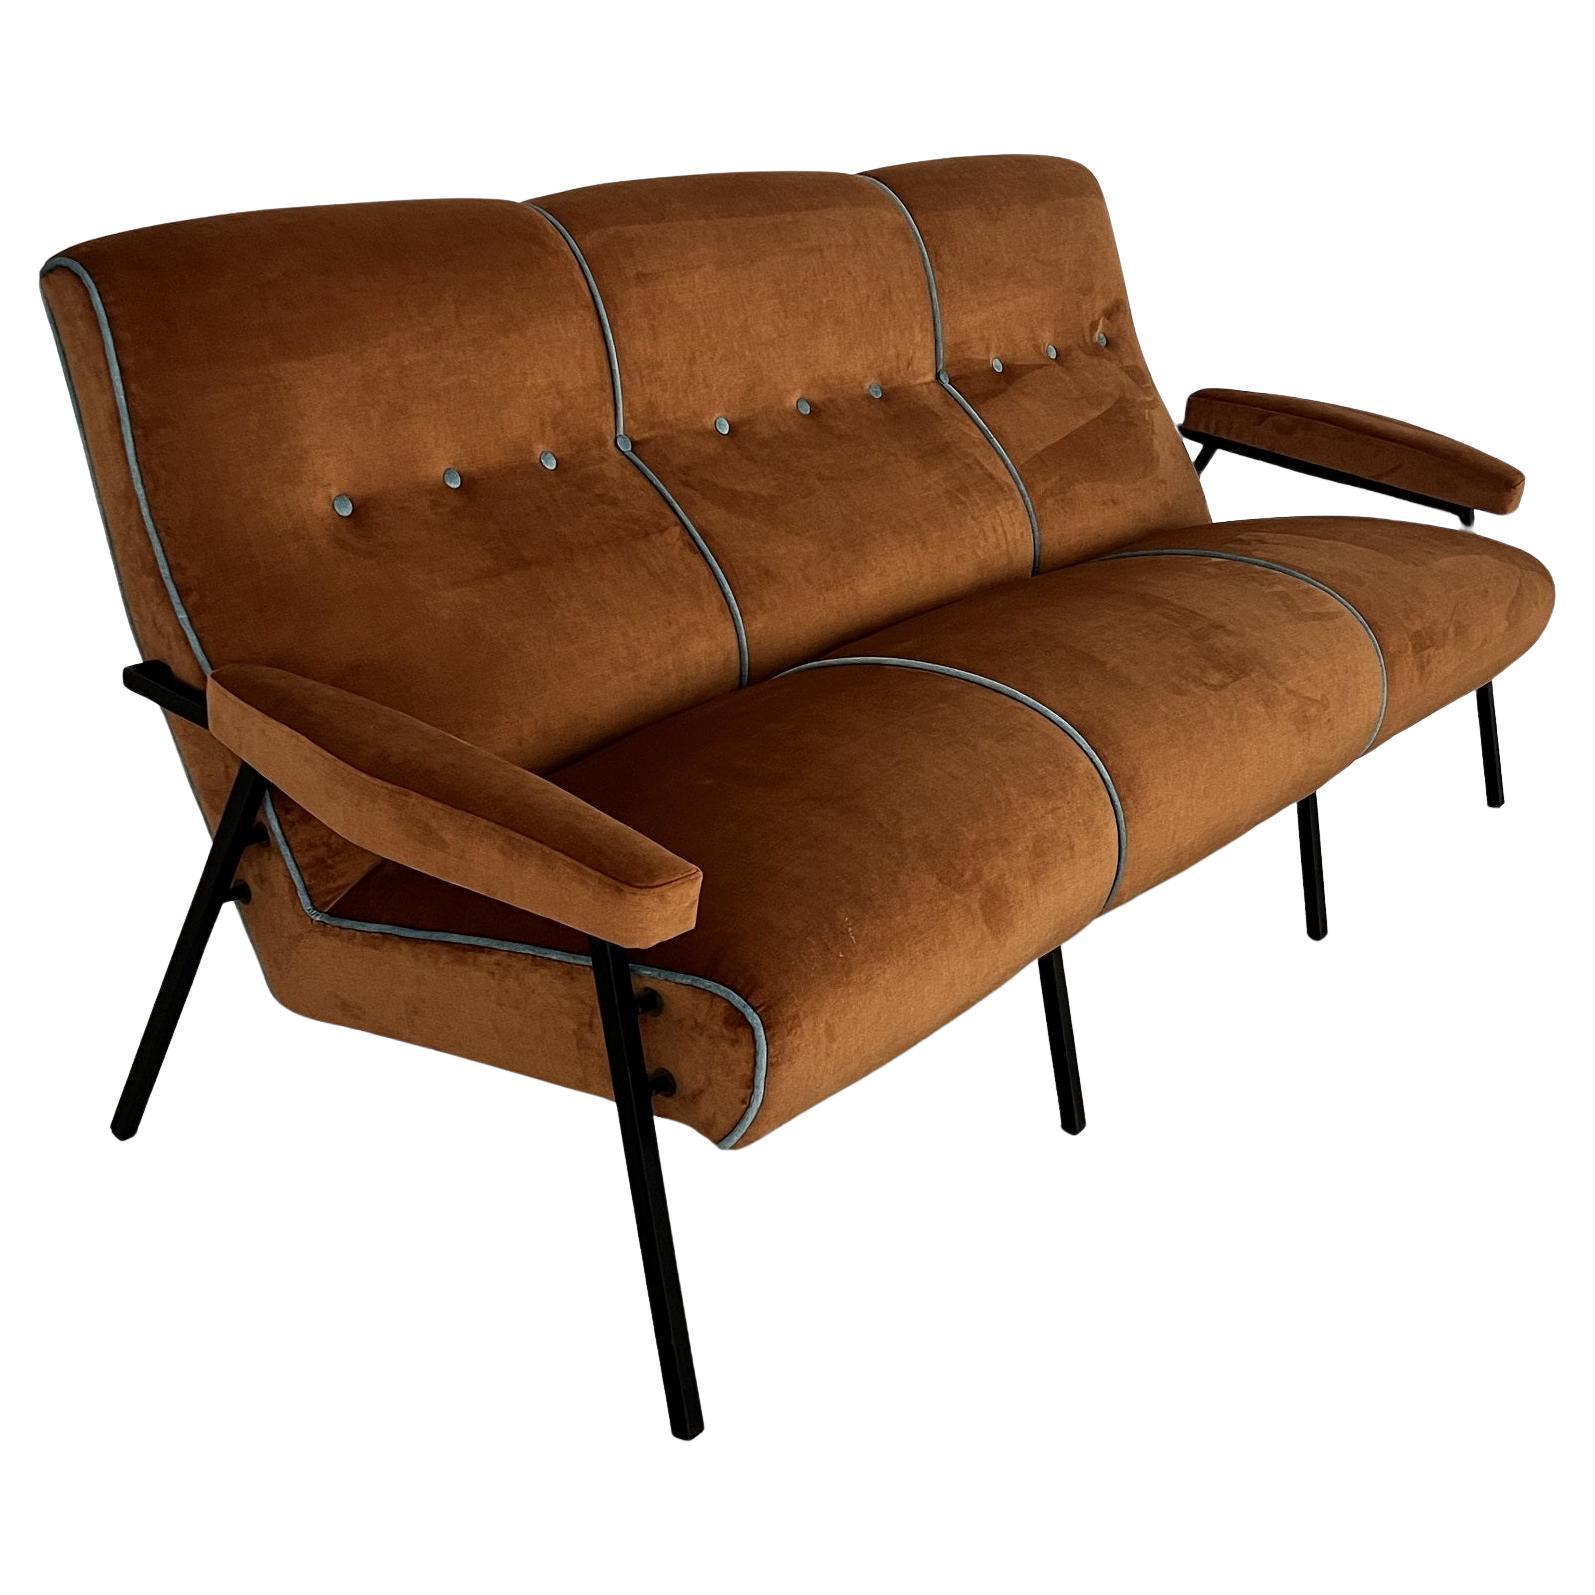 Italian Re-upholstered Midcentury Settee or Sofa